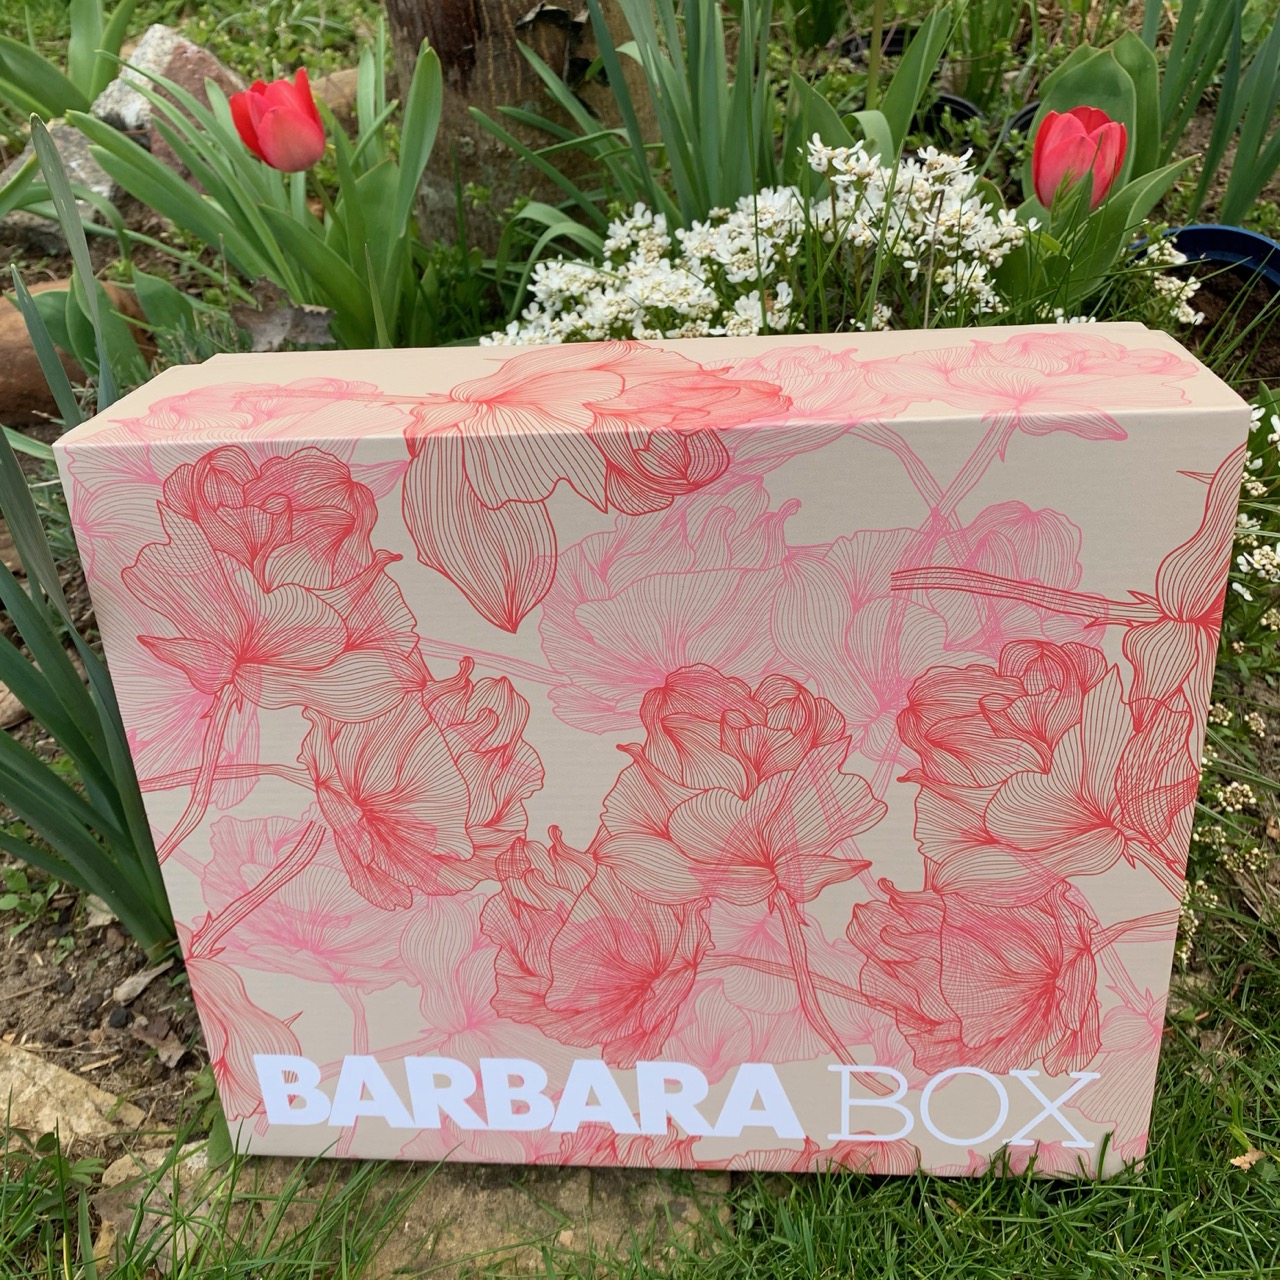 BARBARA BOX – Just bloom